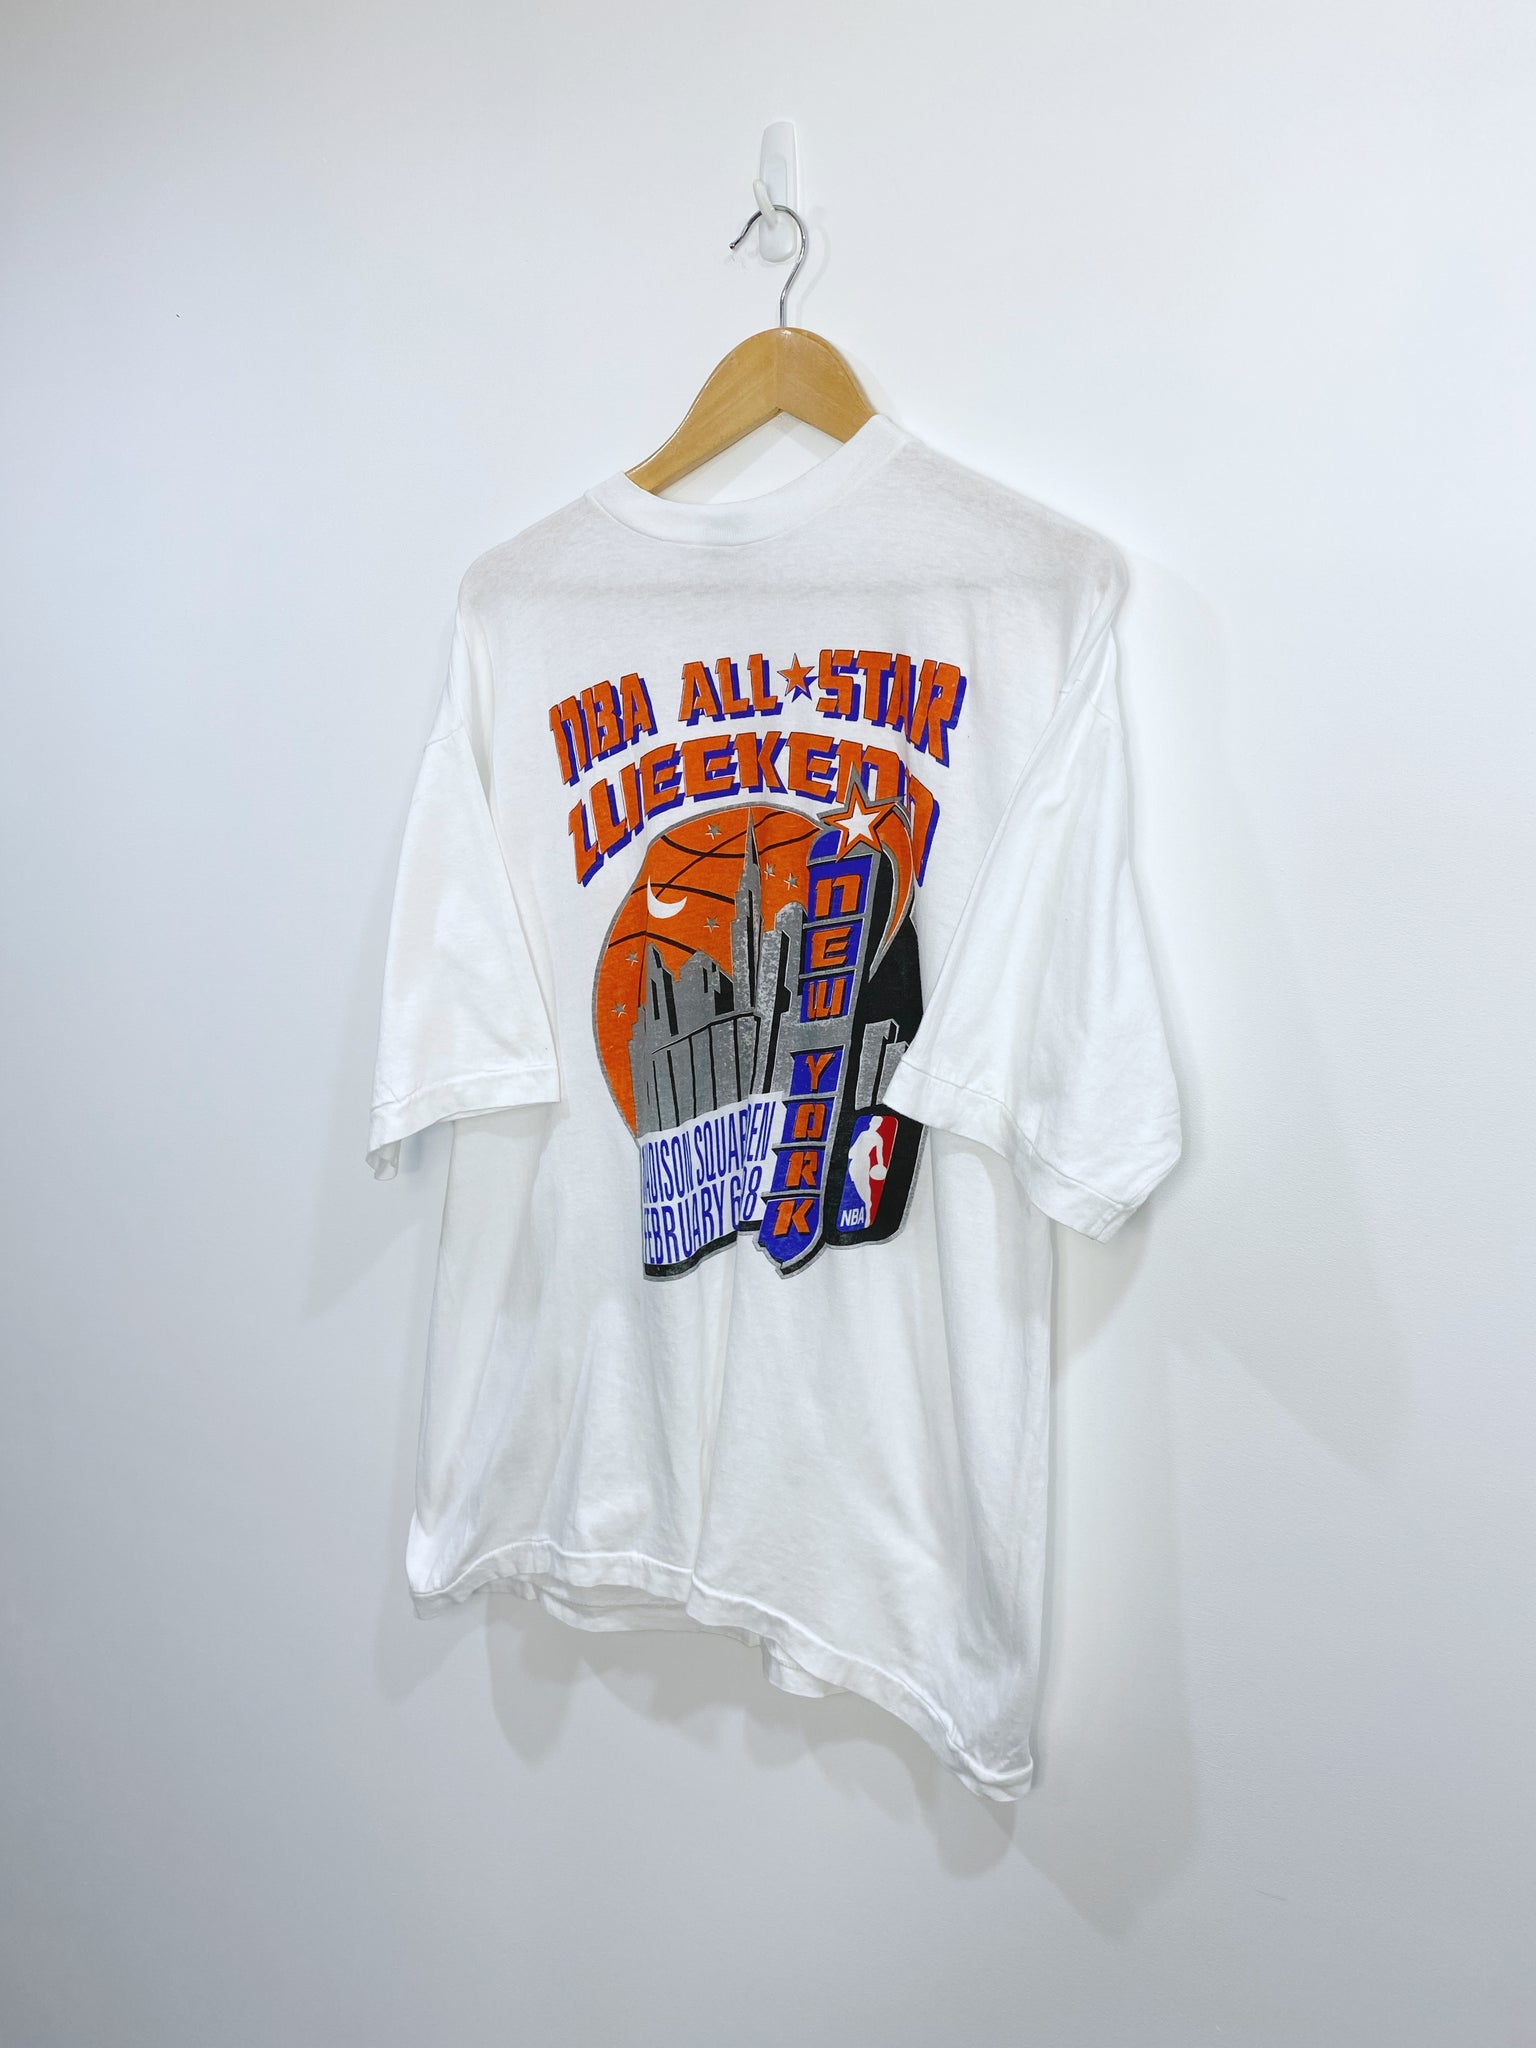 Vintage 1998 New York Knicks T-shirt L